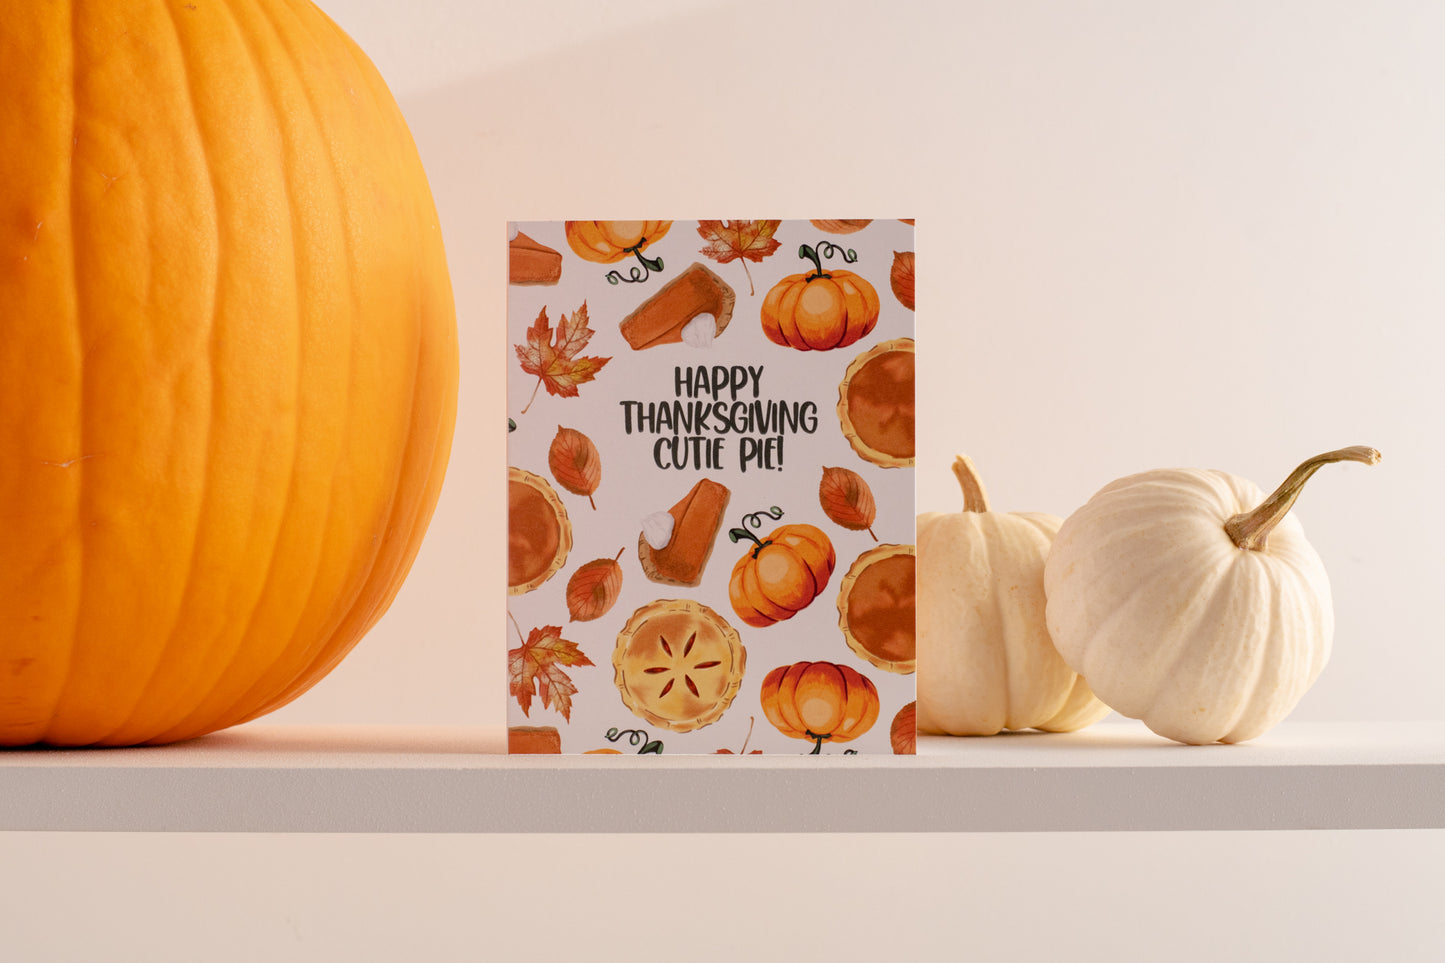 Happy Thanksgiving Cutie Pie - Greeting Card